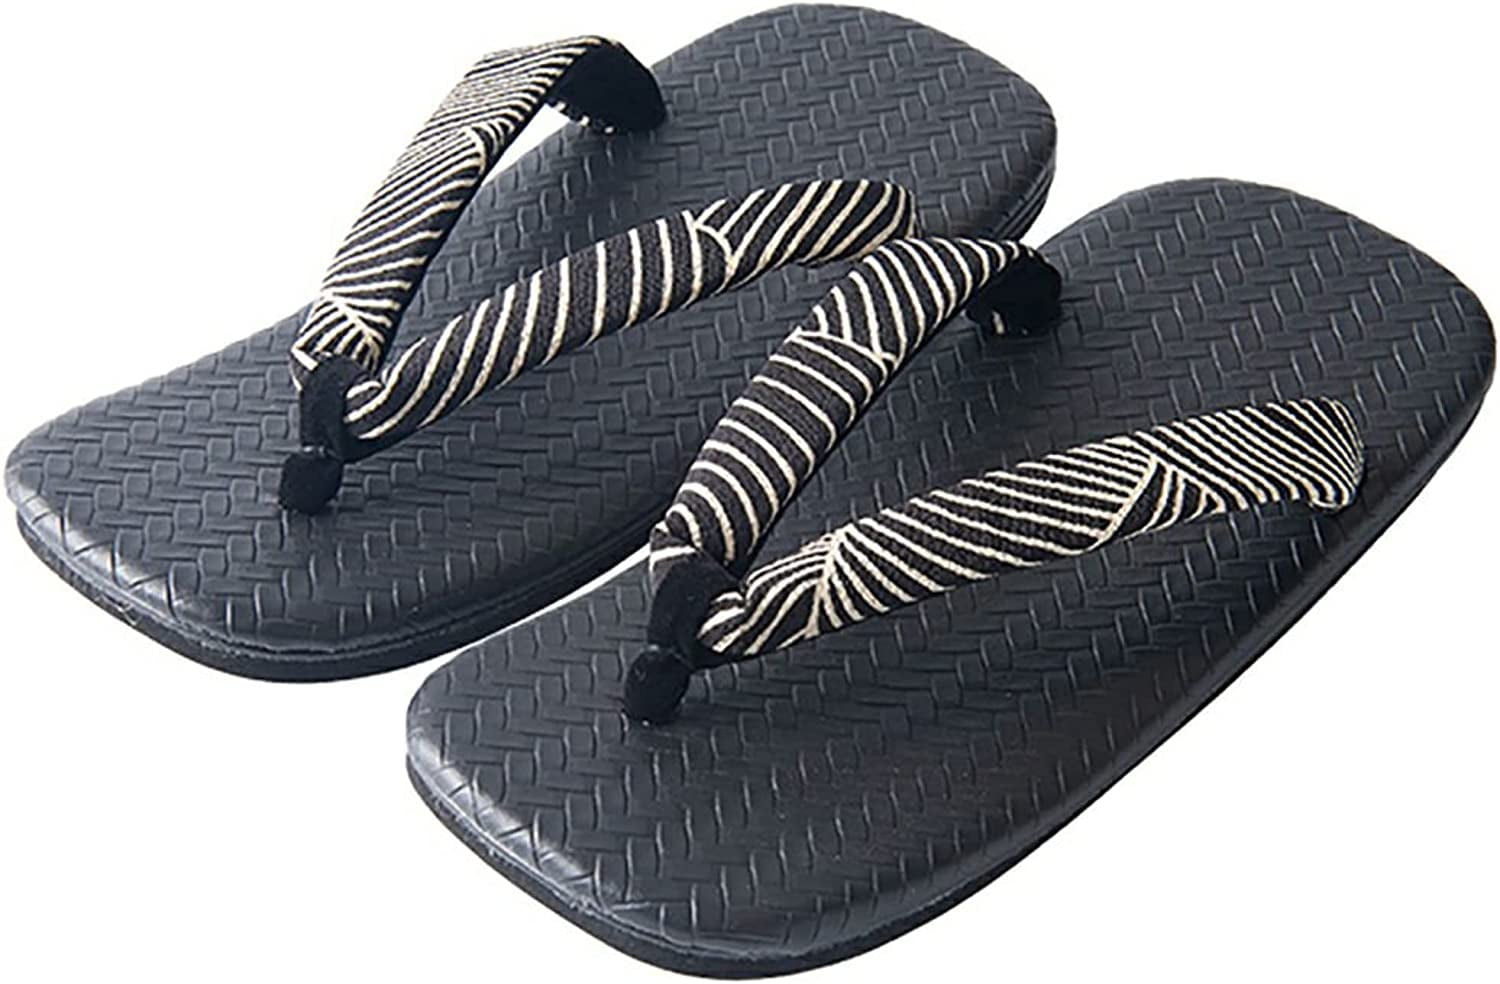 Japanese Setta Sandals, Handmade in Japan, Size 9/Men - Walmart.com